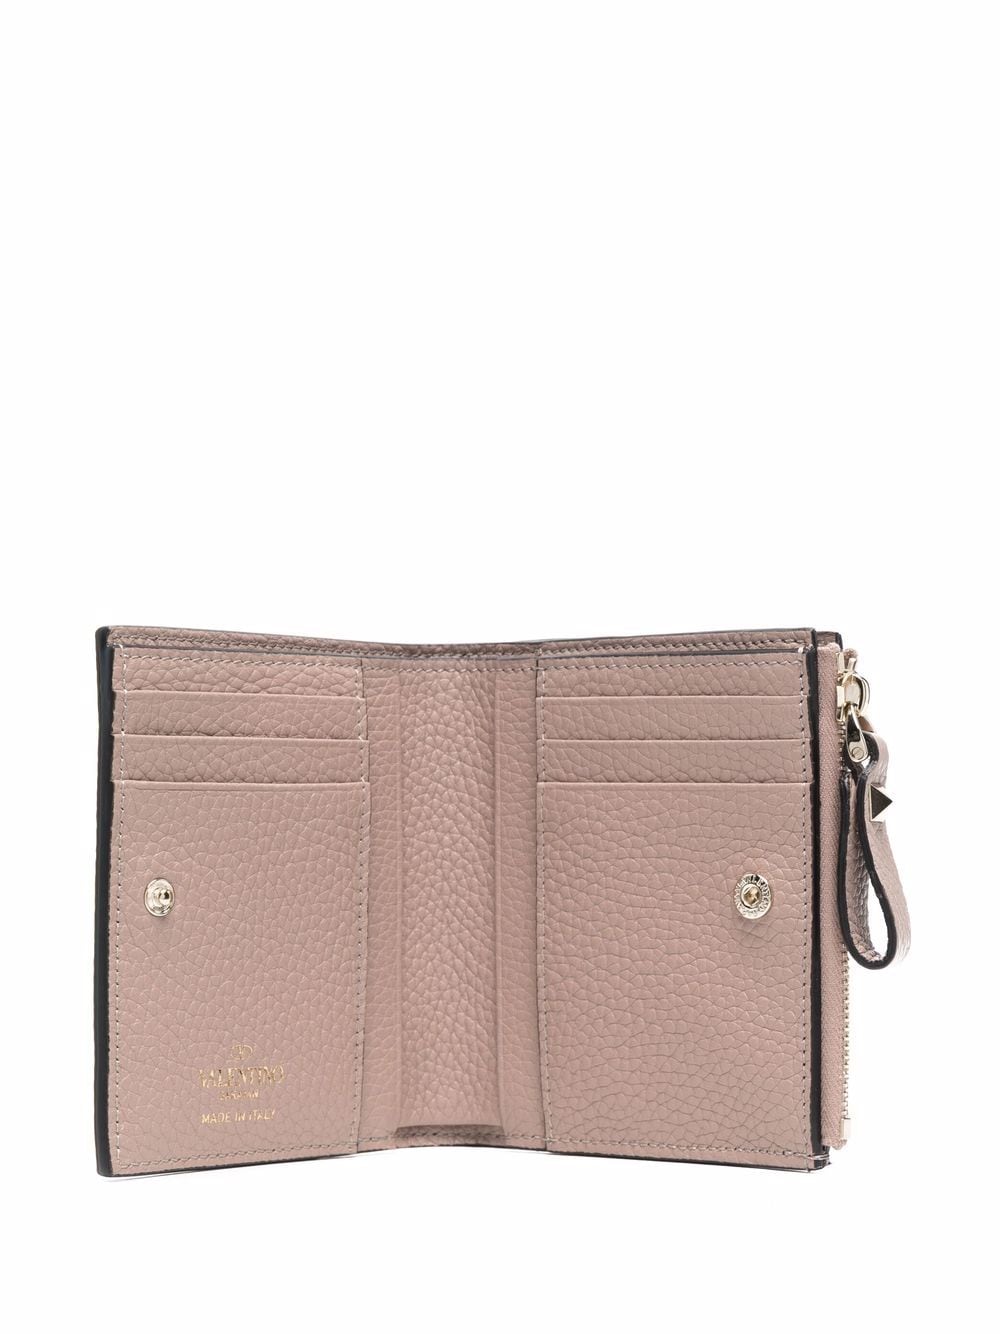 Powder pink/gold-tone leather Rockstud bi-fold wallet